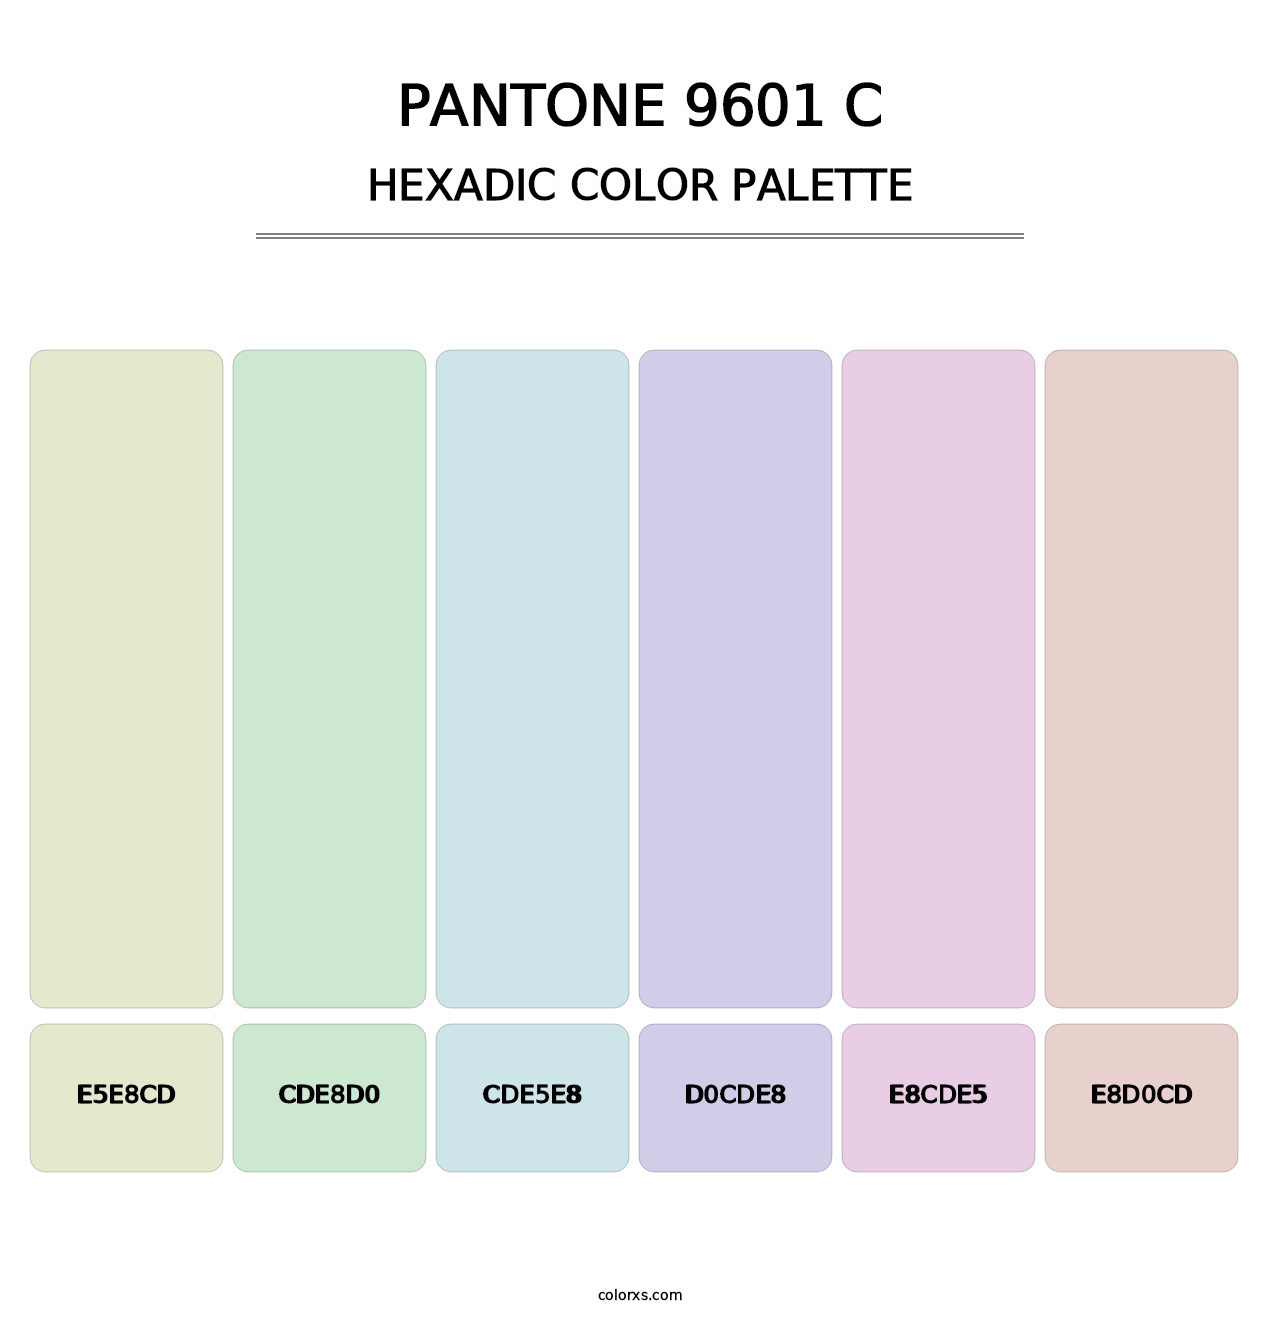 PANTONE 9601 C - Hexadic Color Palette